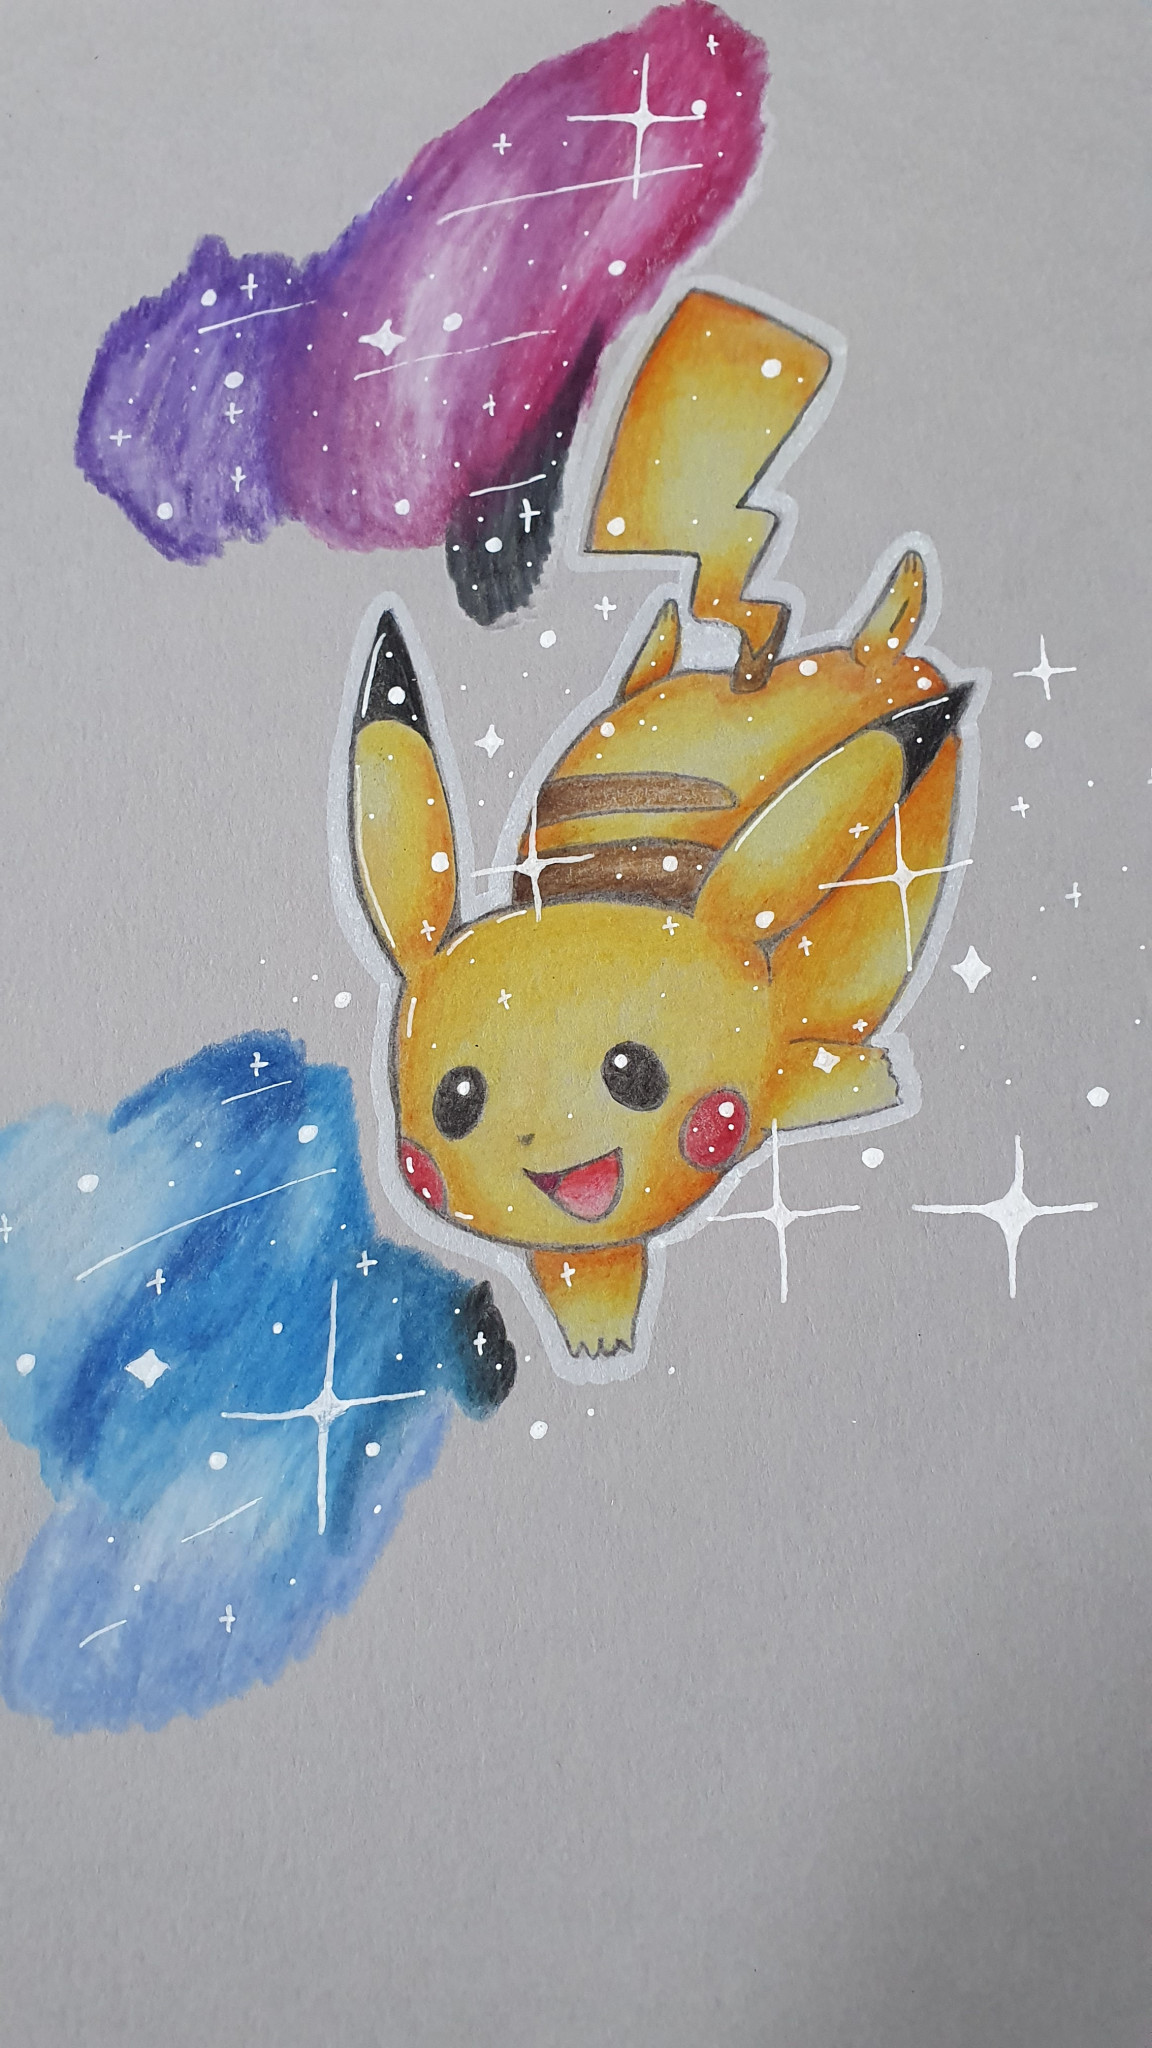 Shiny Pikachu. <3